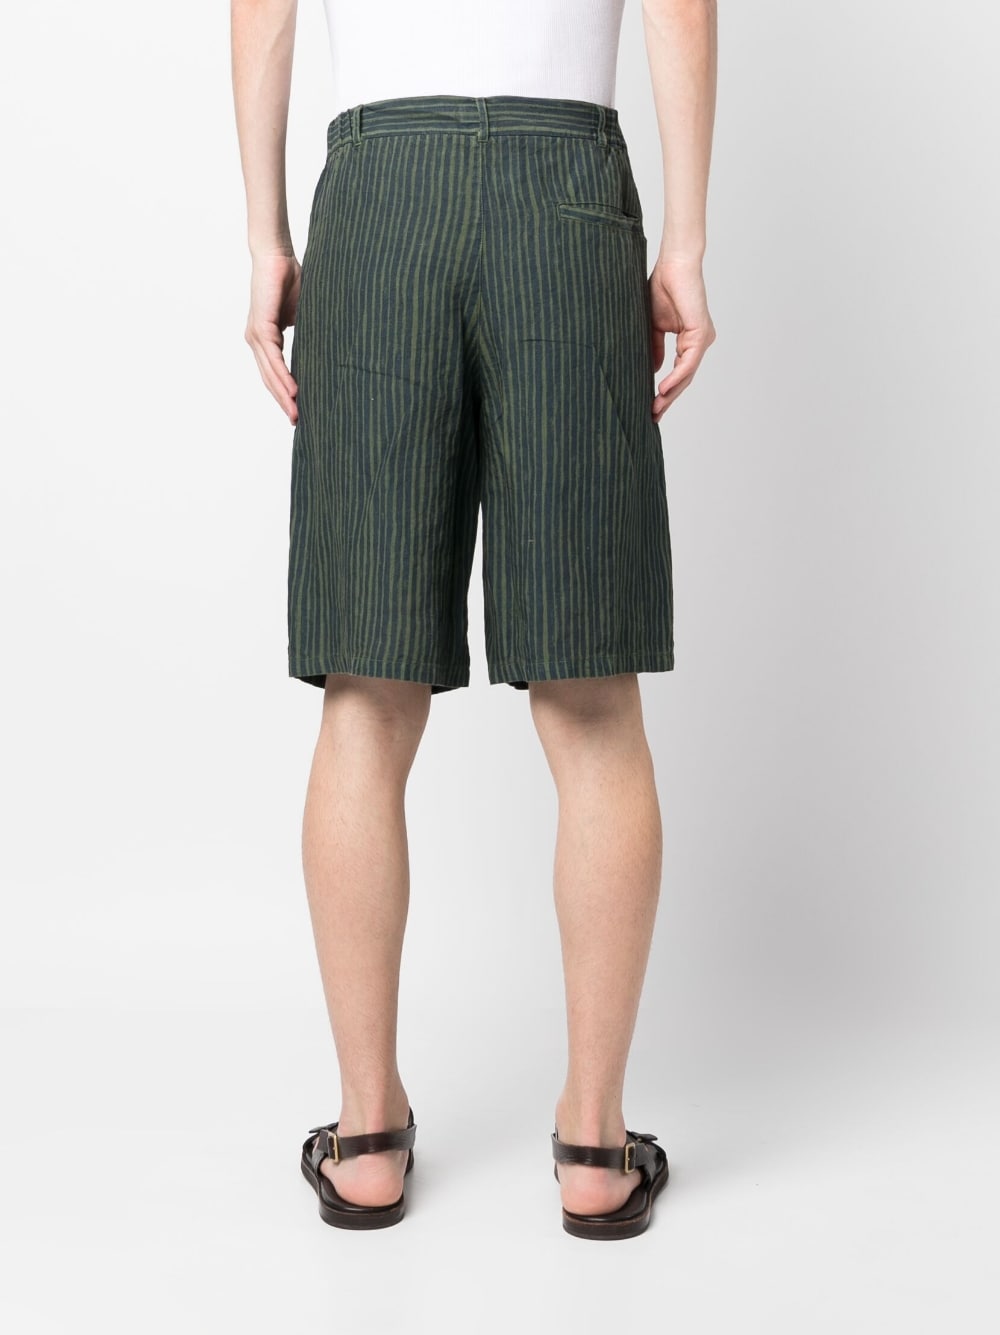 120% LinoLinen Shorts at Fashion Clinic